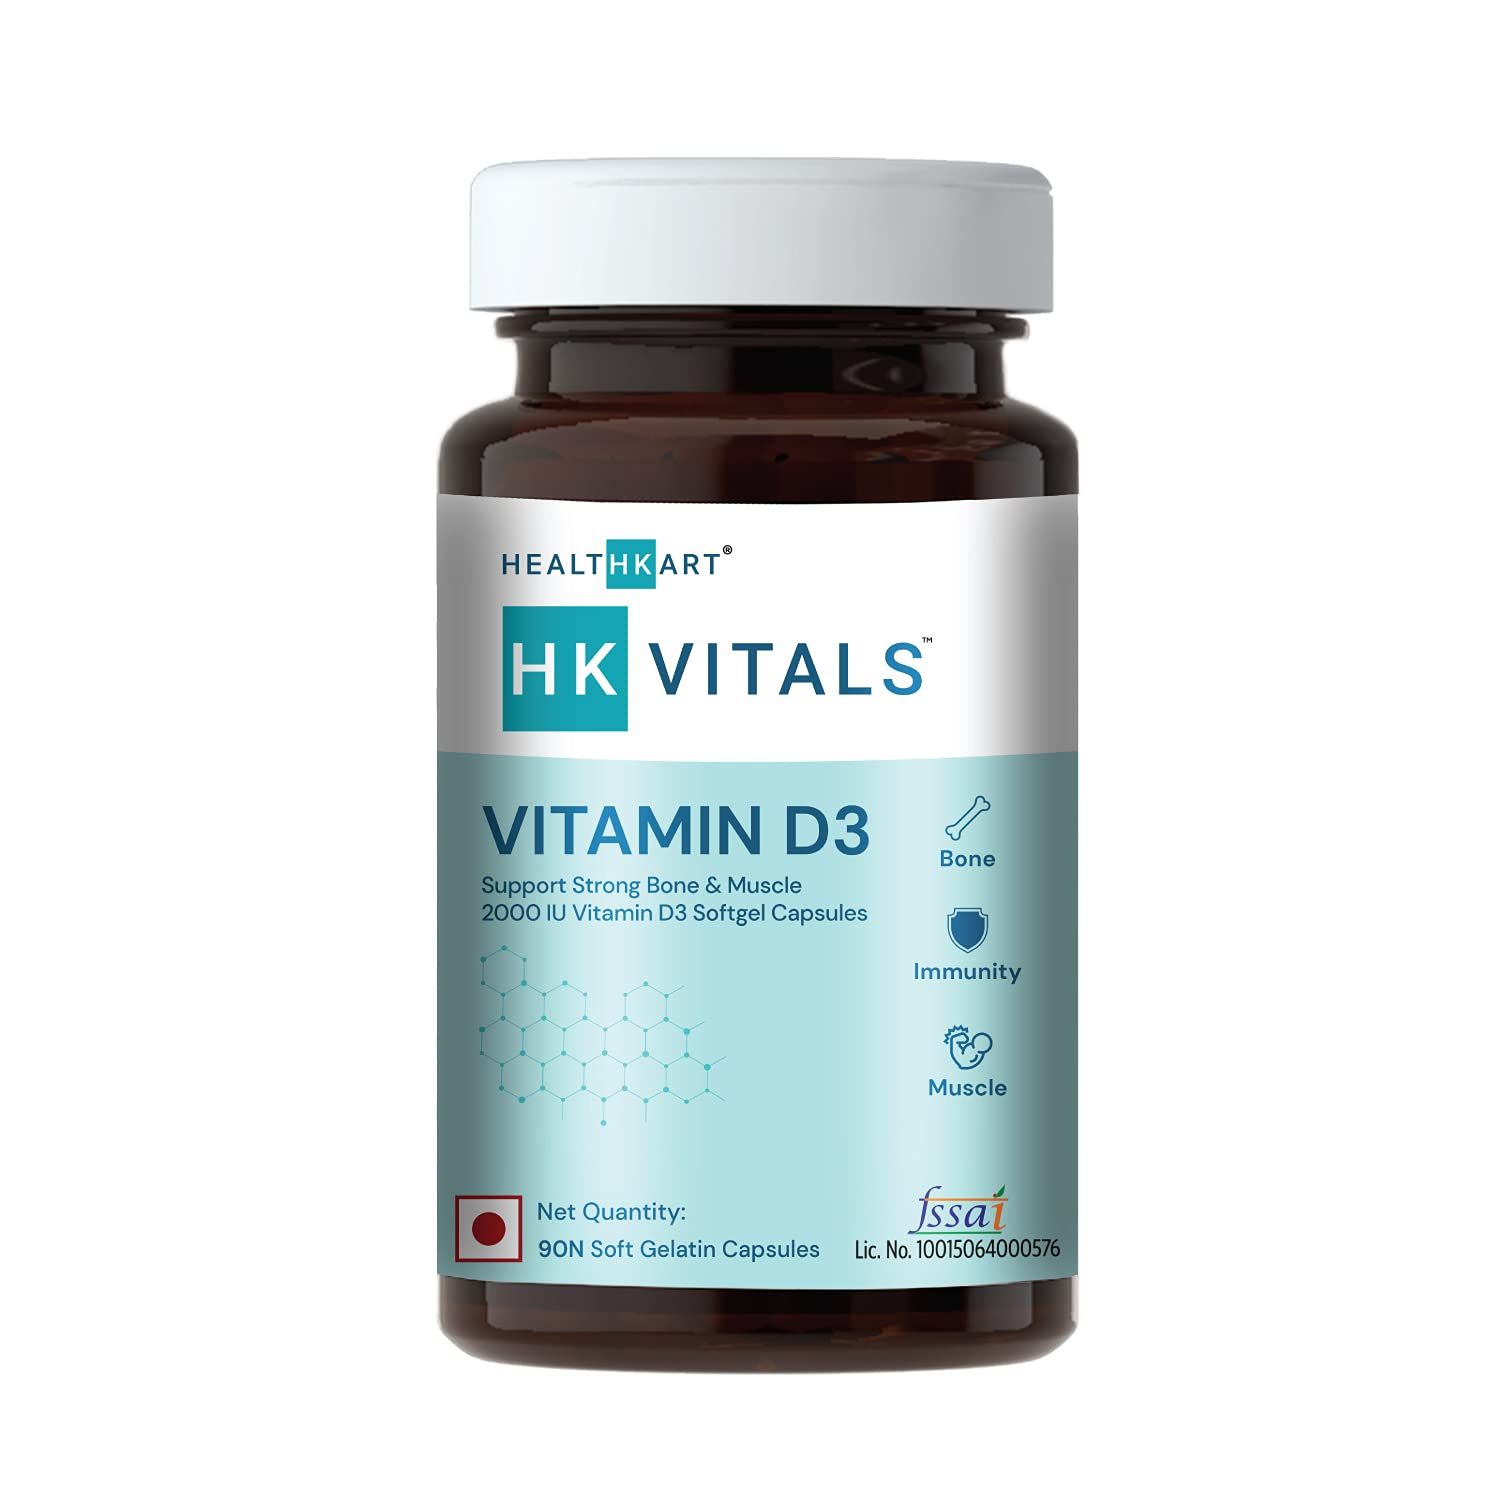 HK Vitals Vitamin D3 Capsules Image